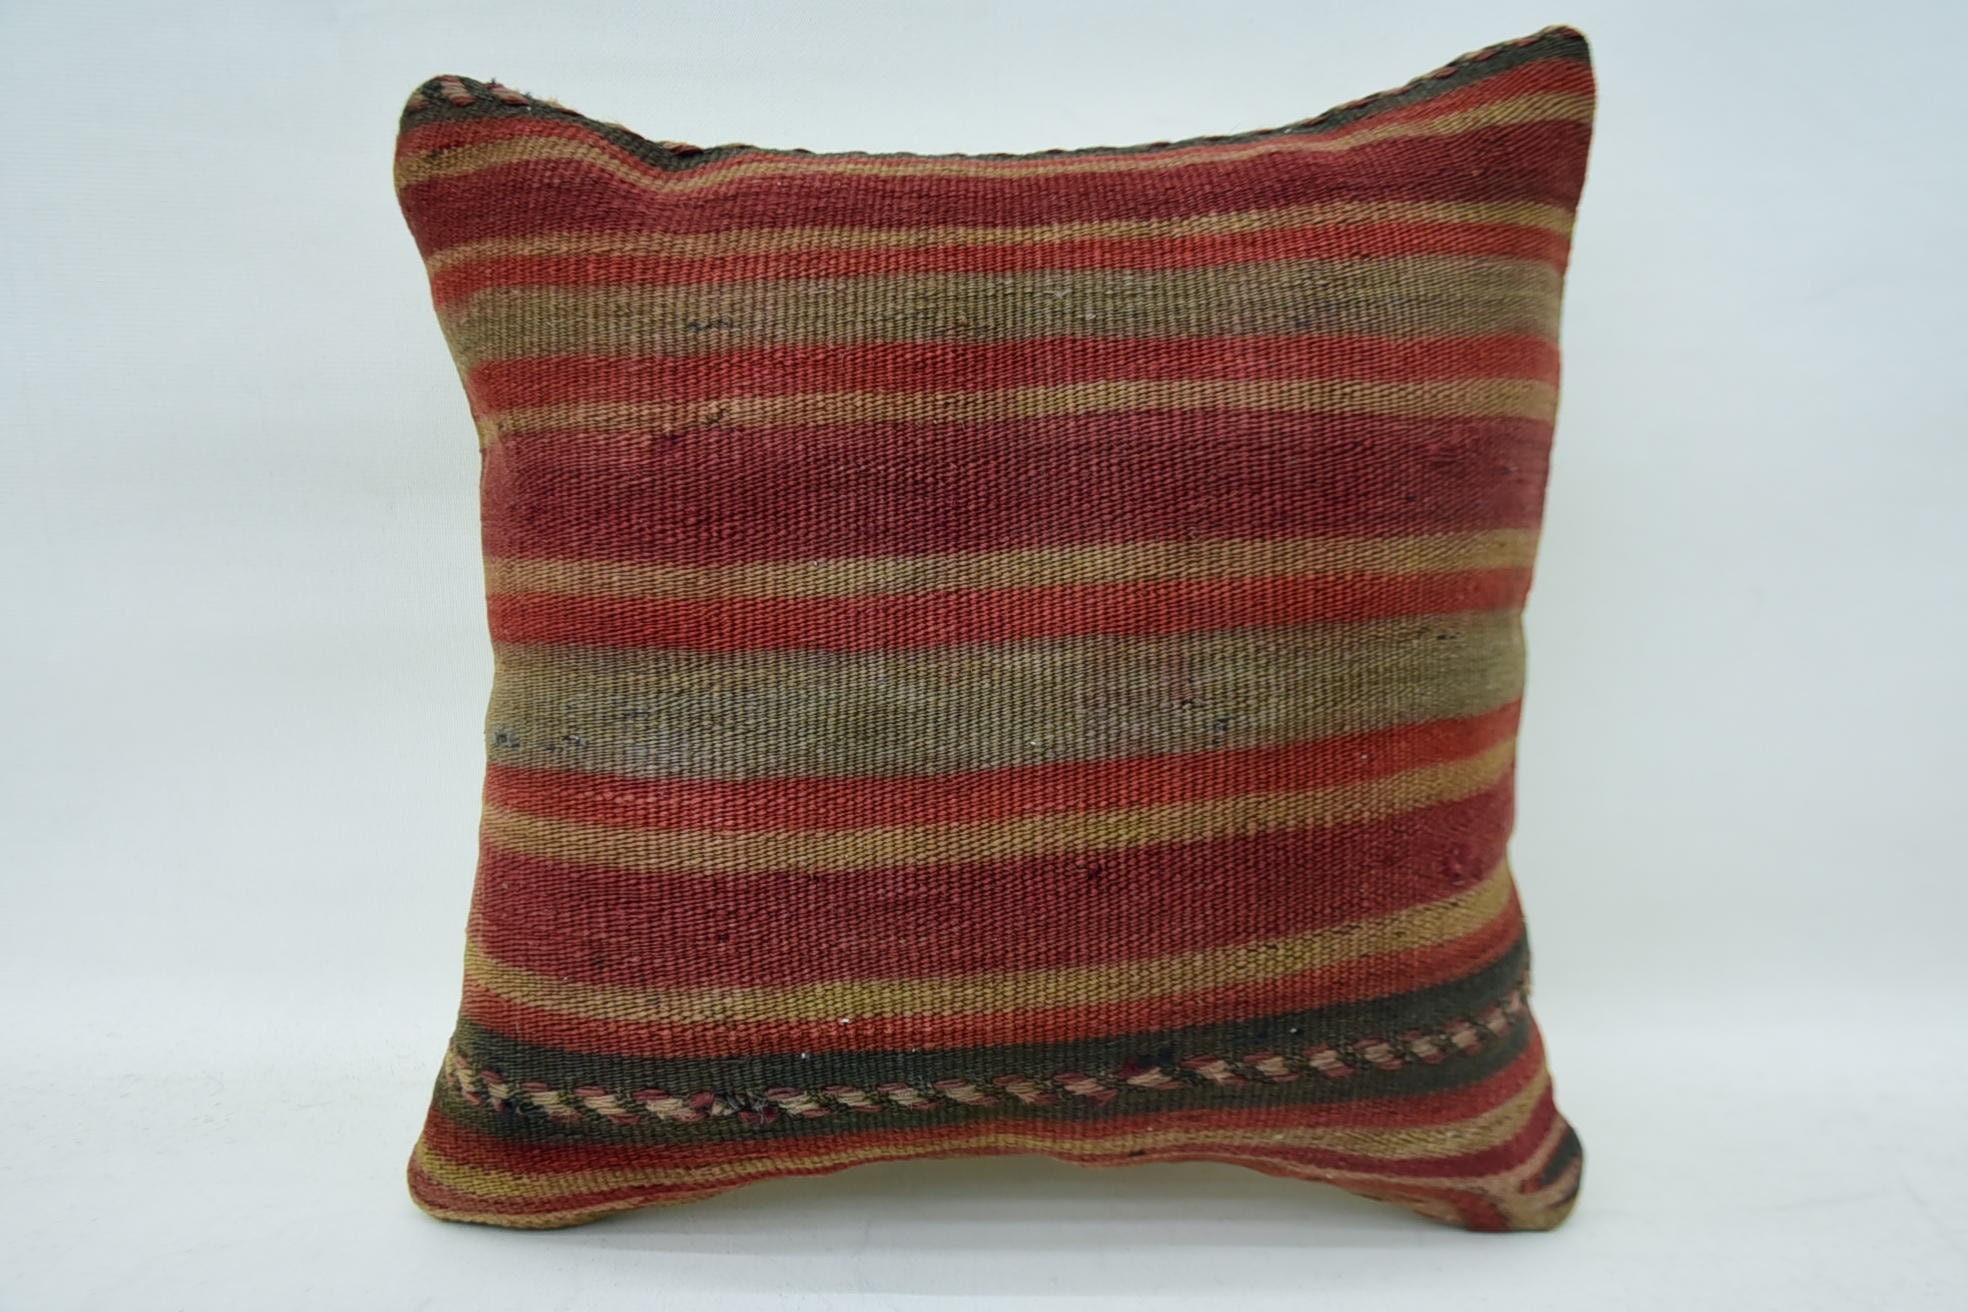 14"x14" Red Cushion Cover, Ethnical Kilim Rug Pillow, Boho Pillow Sham Cover, Pastel Pillow, Ethnic Pillow Sham, Home Decor Pillow